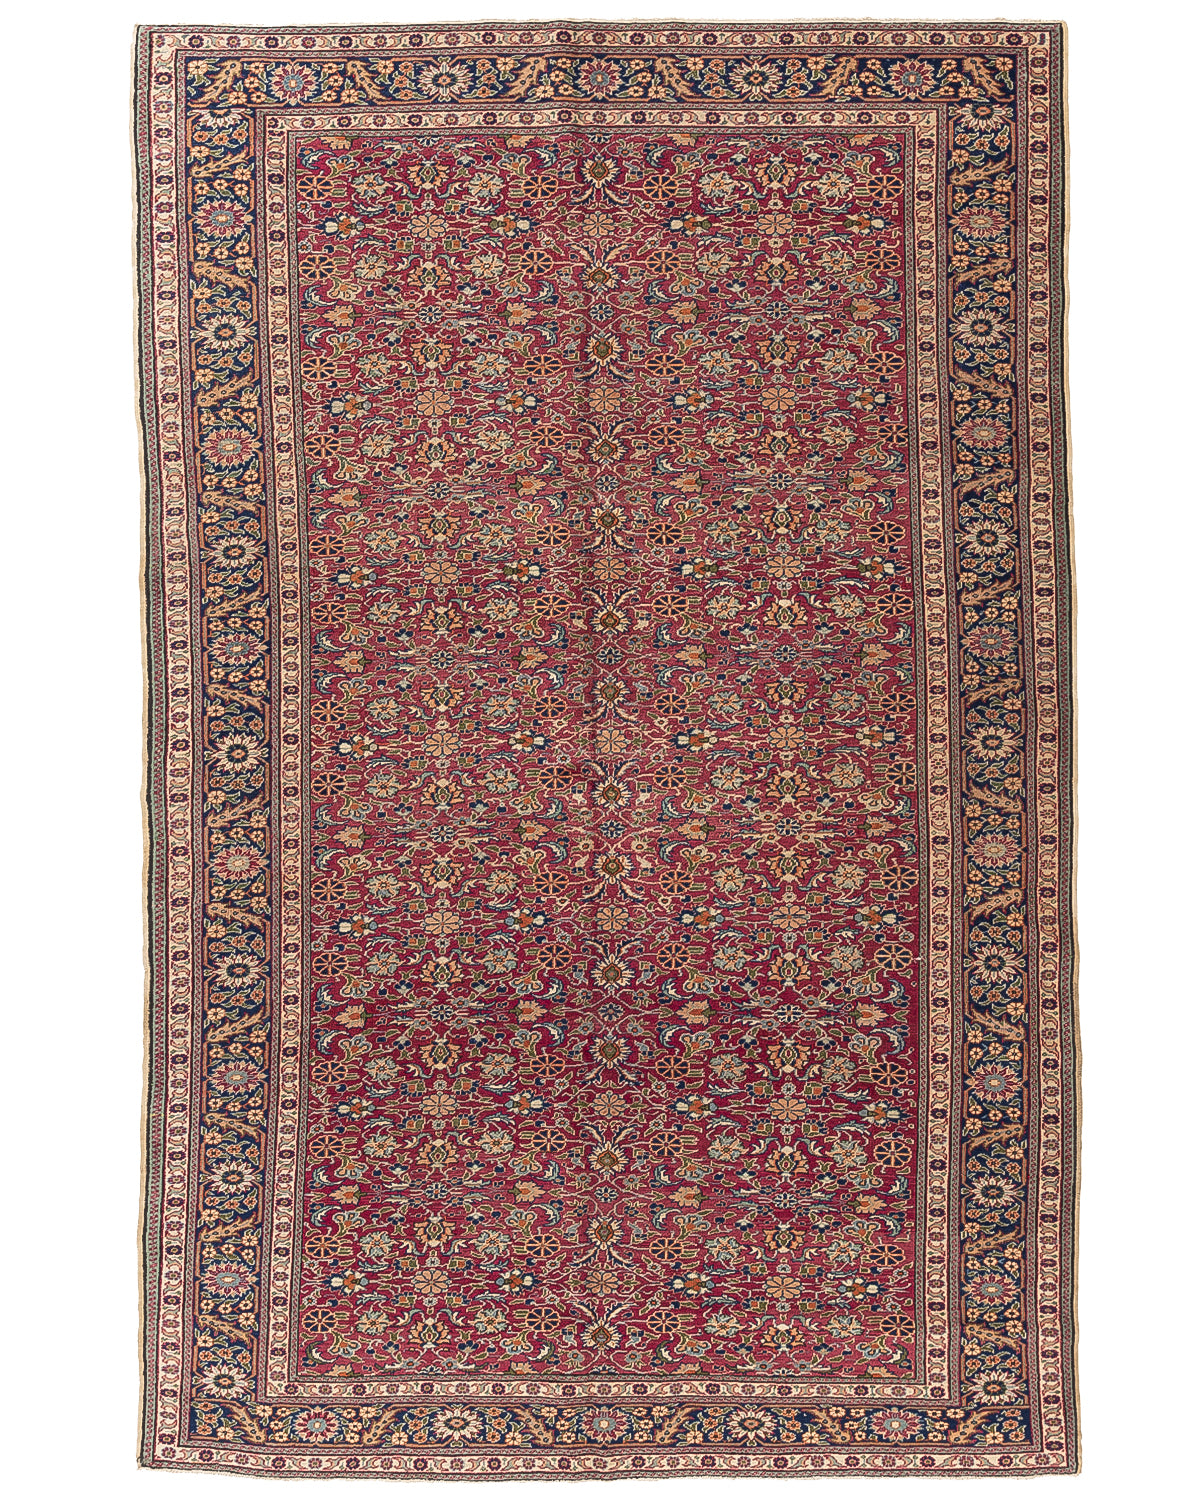 Oriental Rug Anatolian Handmade Wool On Cotton 210 X 310 Cm - 6' 11'' X 10' 3'' ER23